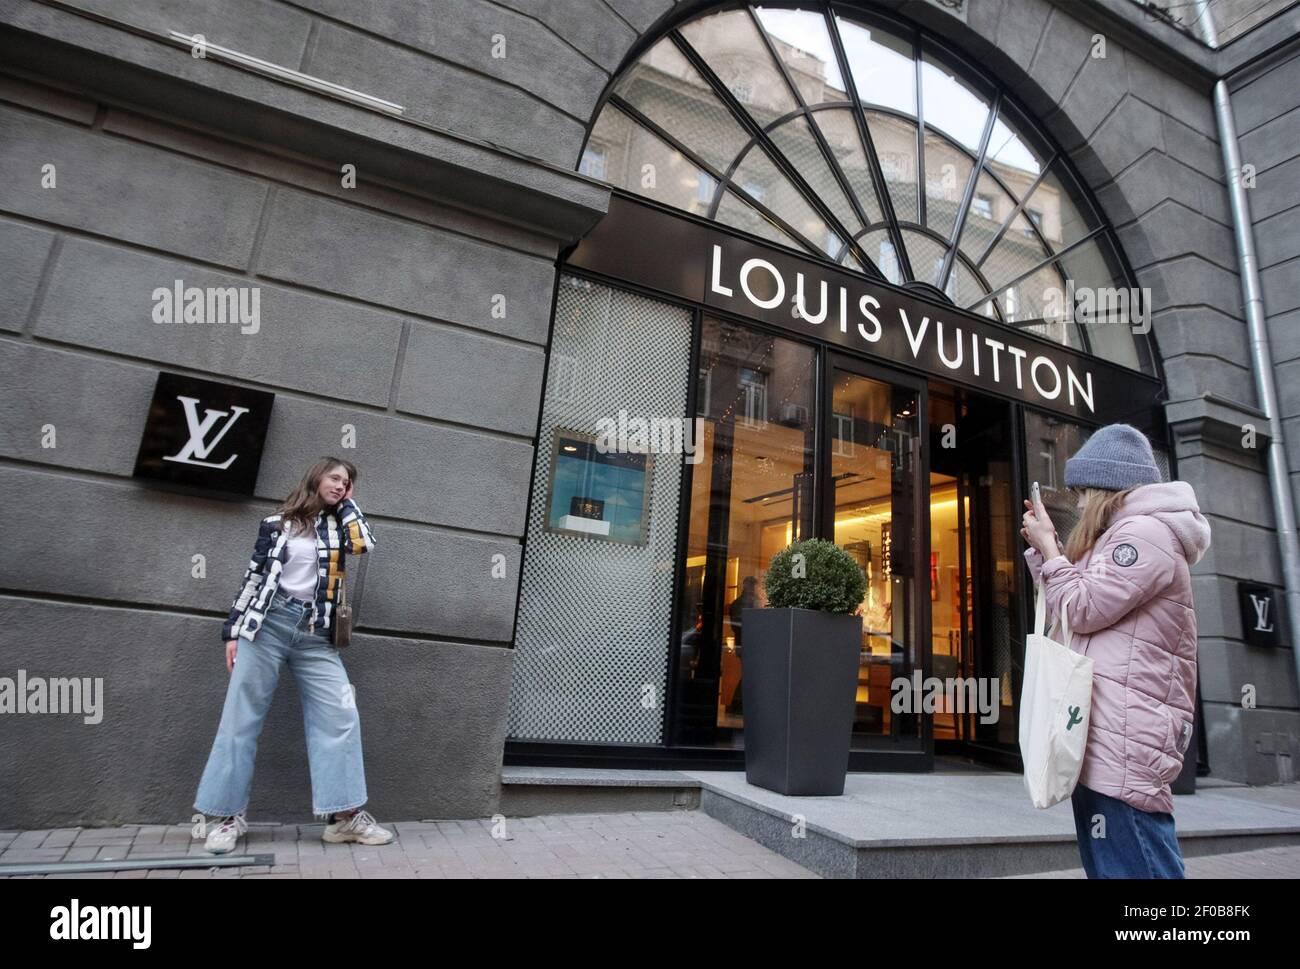 Louis Vuitton Fashion Logo Limited Luxury Brand Bathroom Set Home